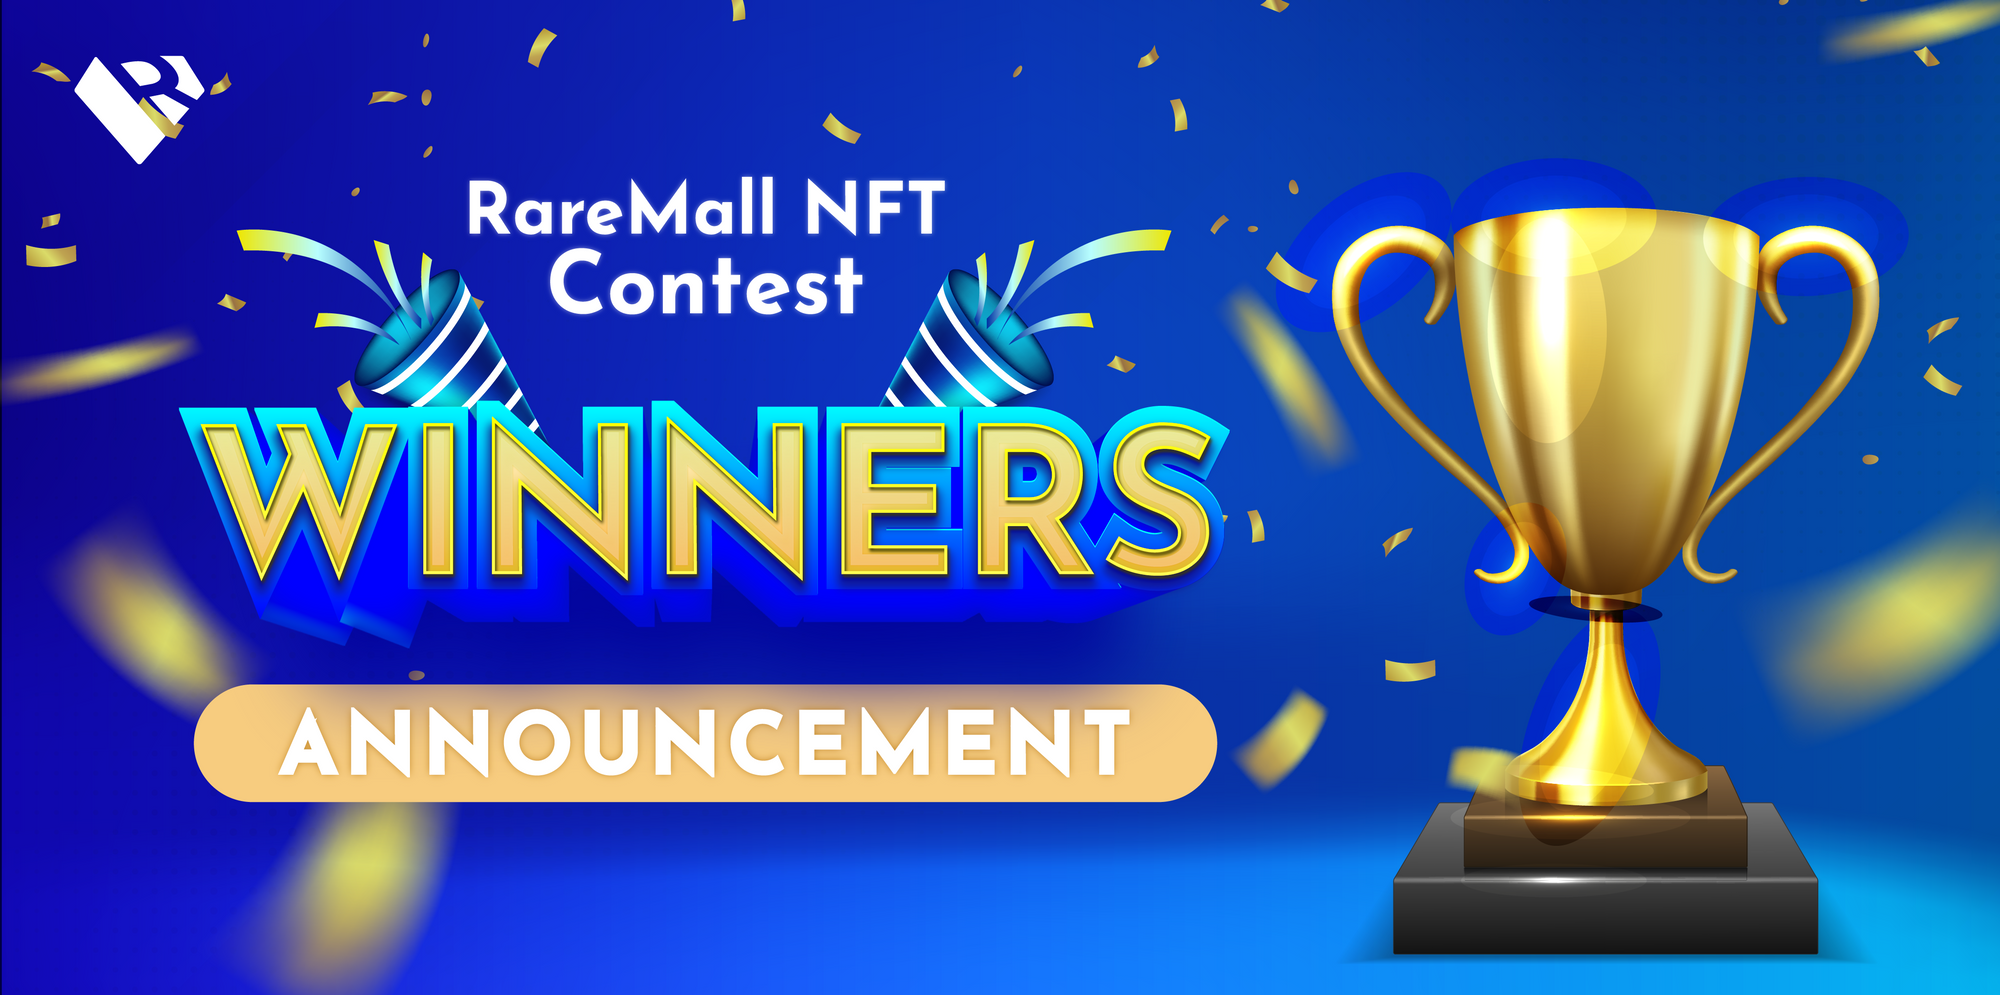 RareMall NFT Contest #NFTUntoldStories: Winners Announcement